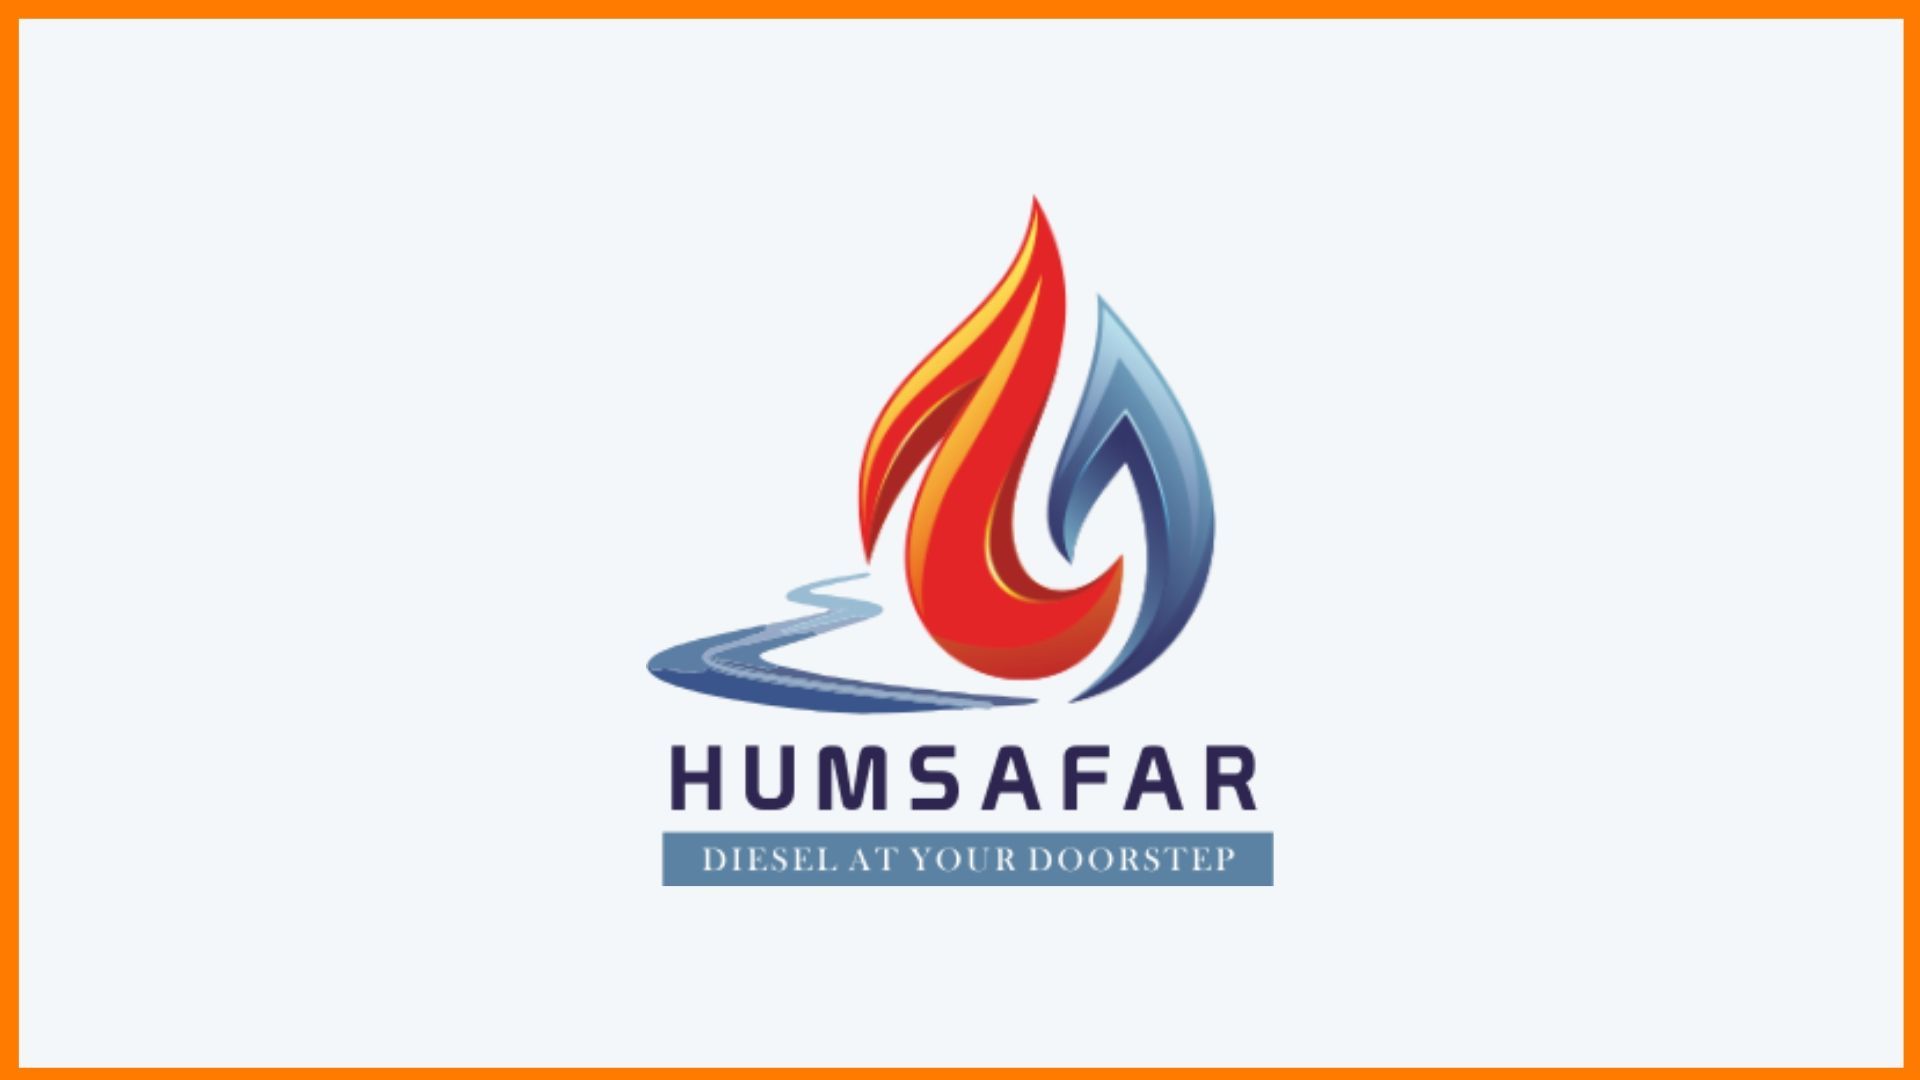 Humsafar India - Offering Doorstep Diesel Refuelling Services to Industries!